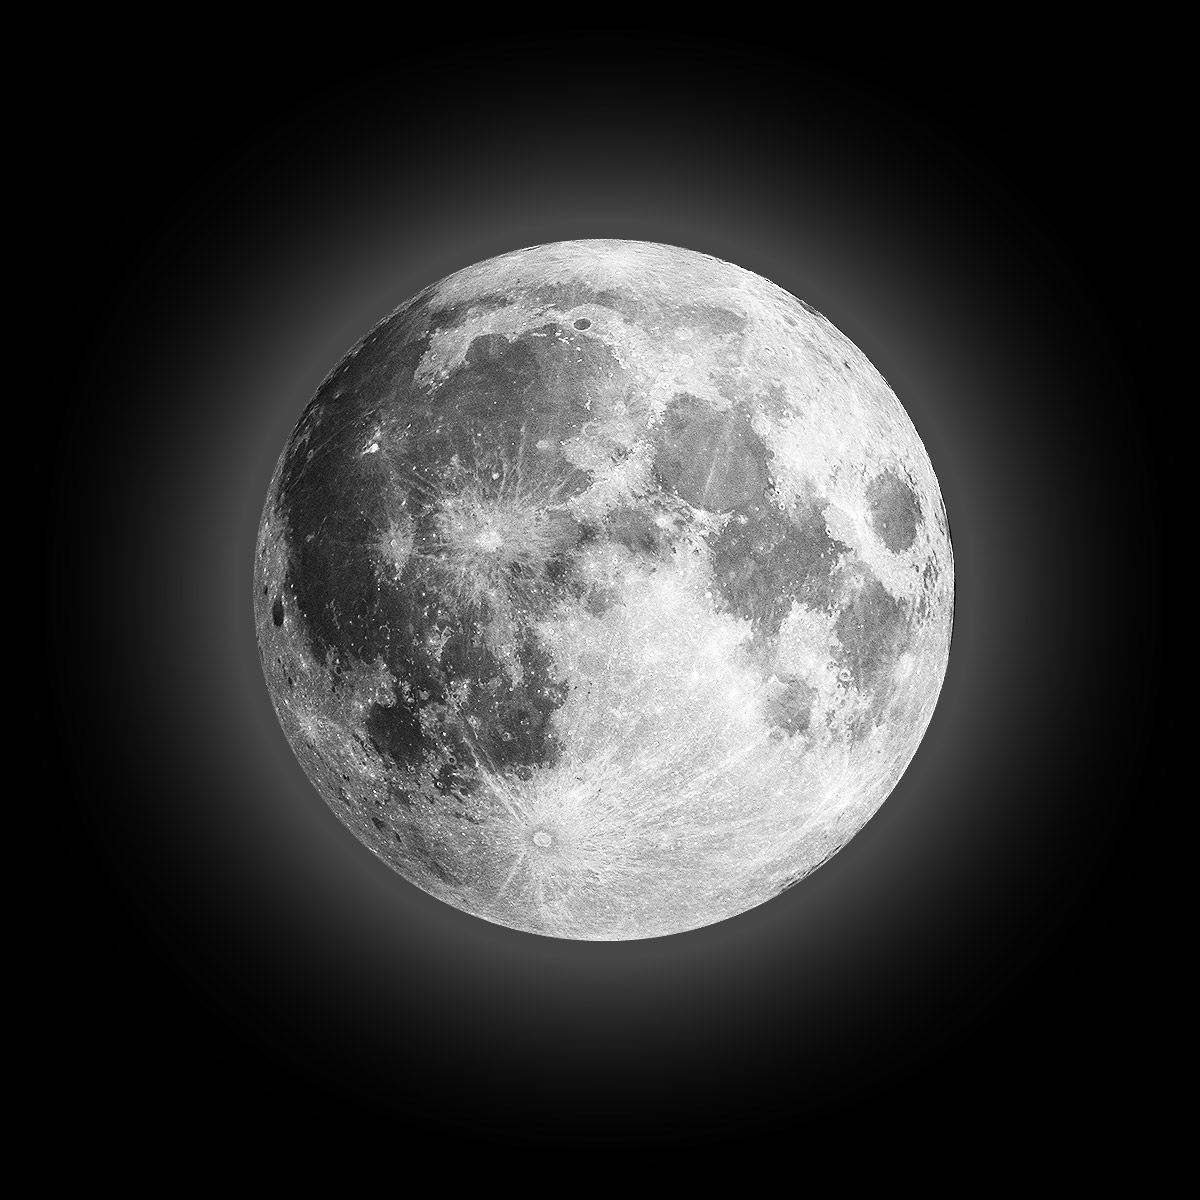 When is the Next Full Moon? Full Moon Calendar 2024